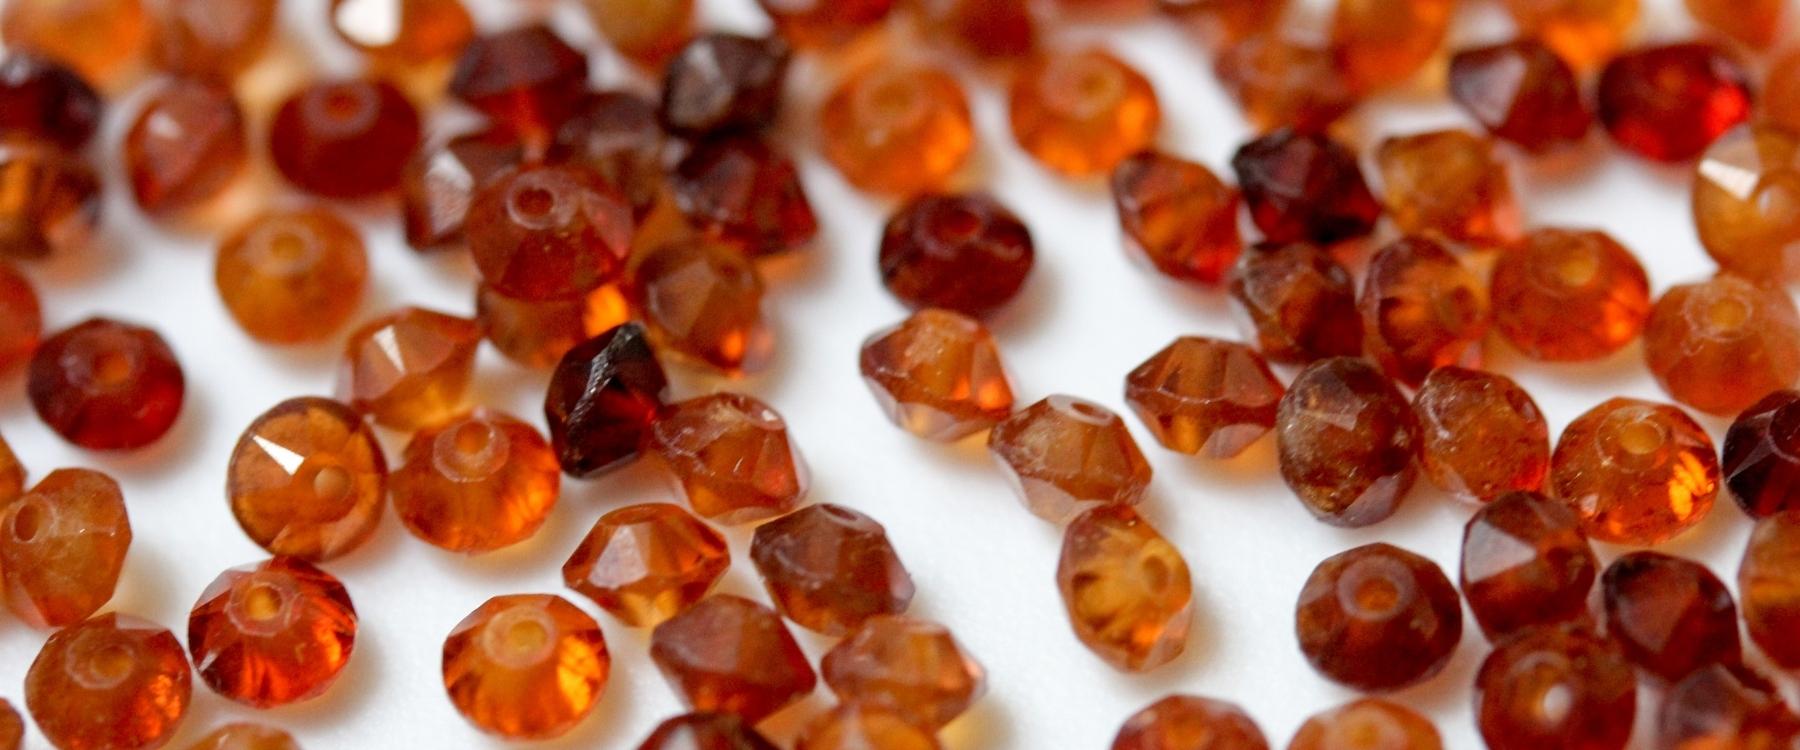 Etched Orange Garnet Crystal / Etched Garnet / Orange Garnet / Natural  Garnet Crystal / Garnet Gemstone / Garnet Stone / January Birthstone 